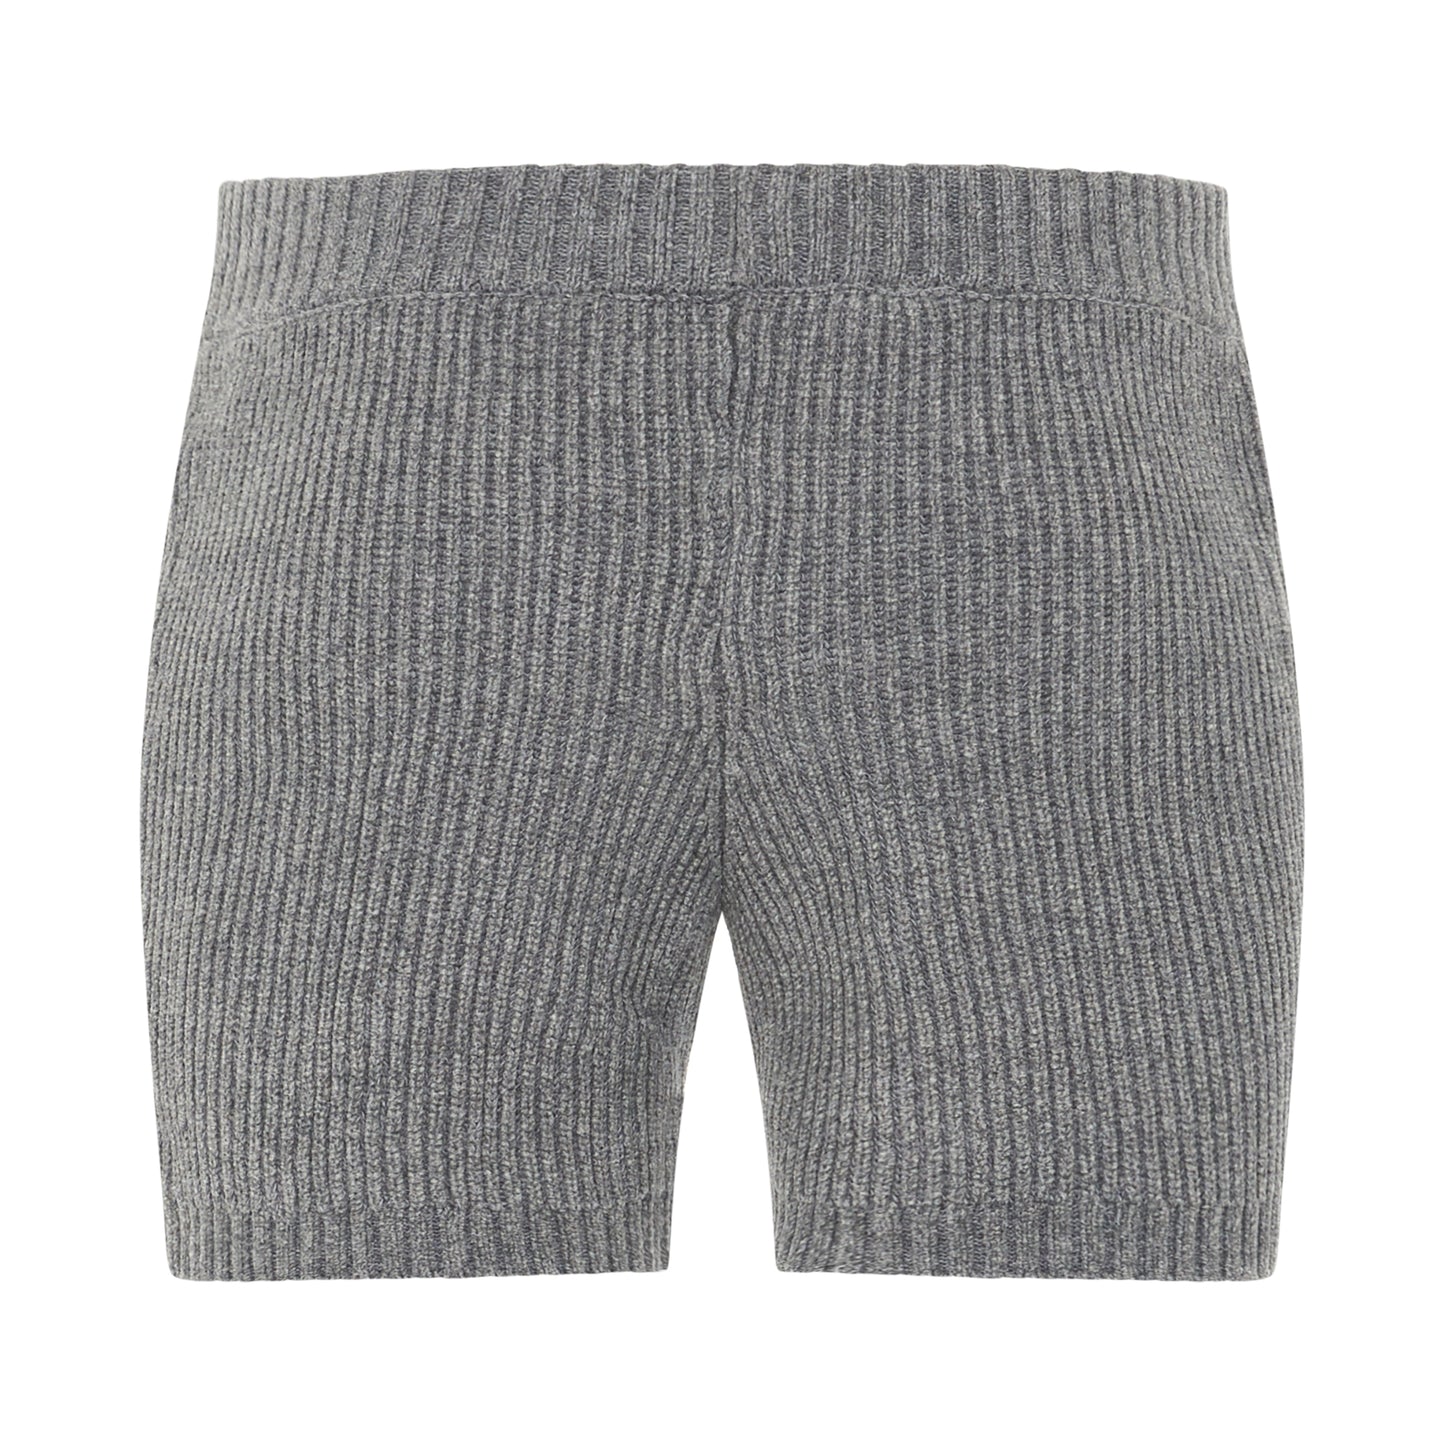 PXP Knit Shorts in Grey/Black